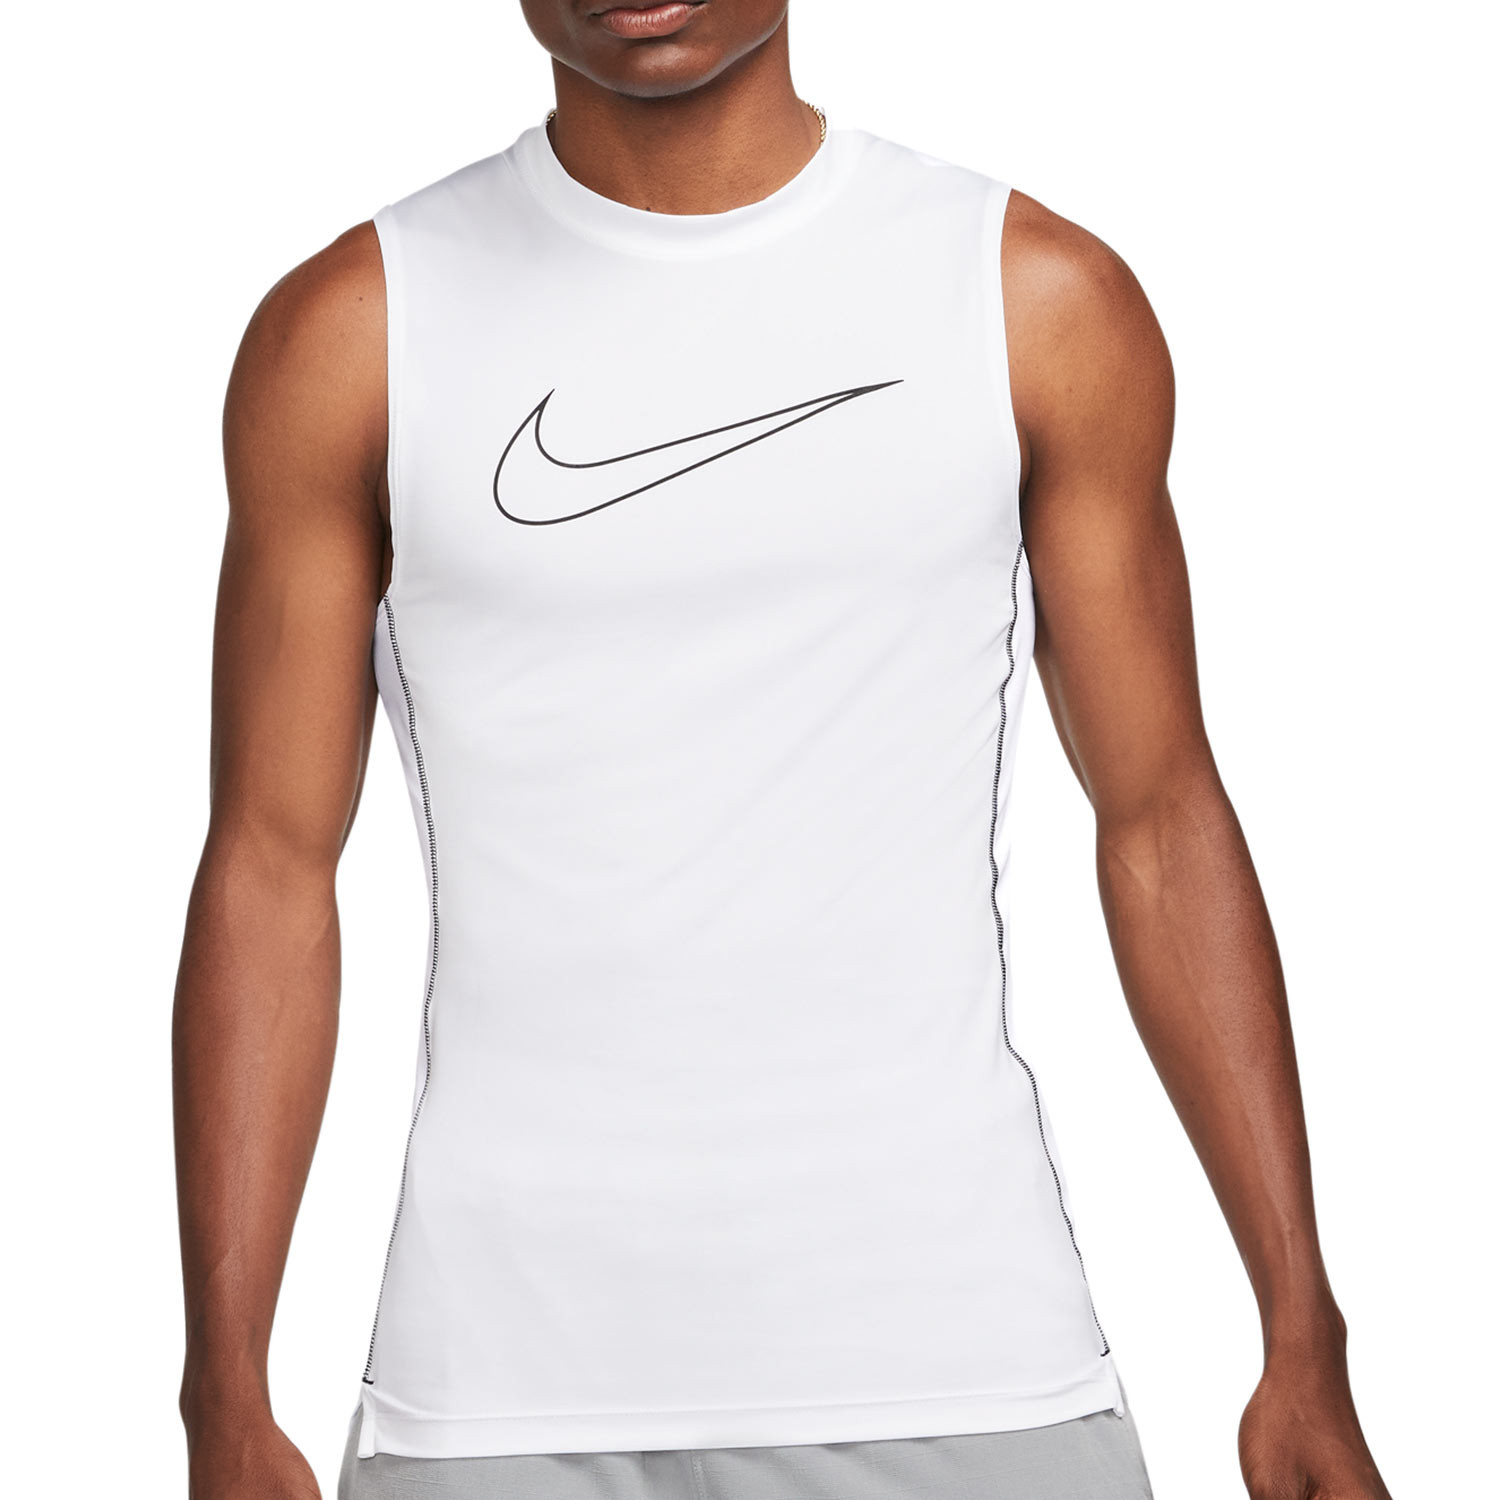 Camiseta de Tirantes, Color Blanco (Tallas: 14-16-S-M-L-XL)